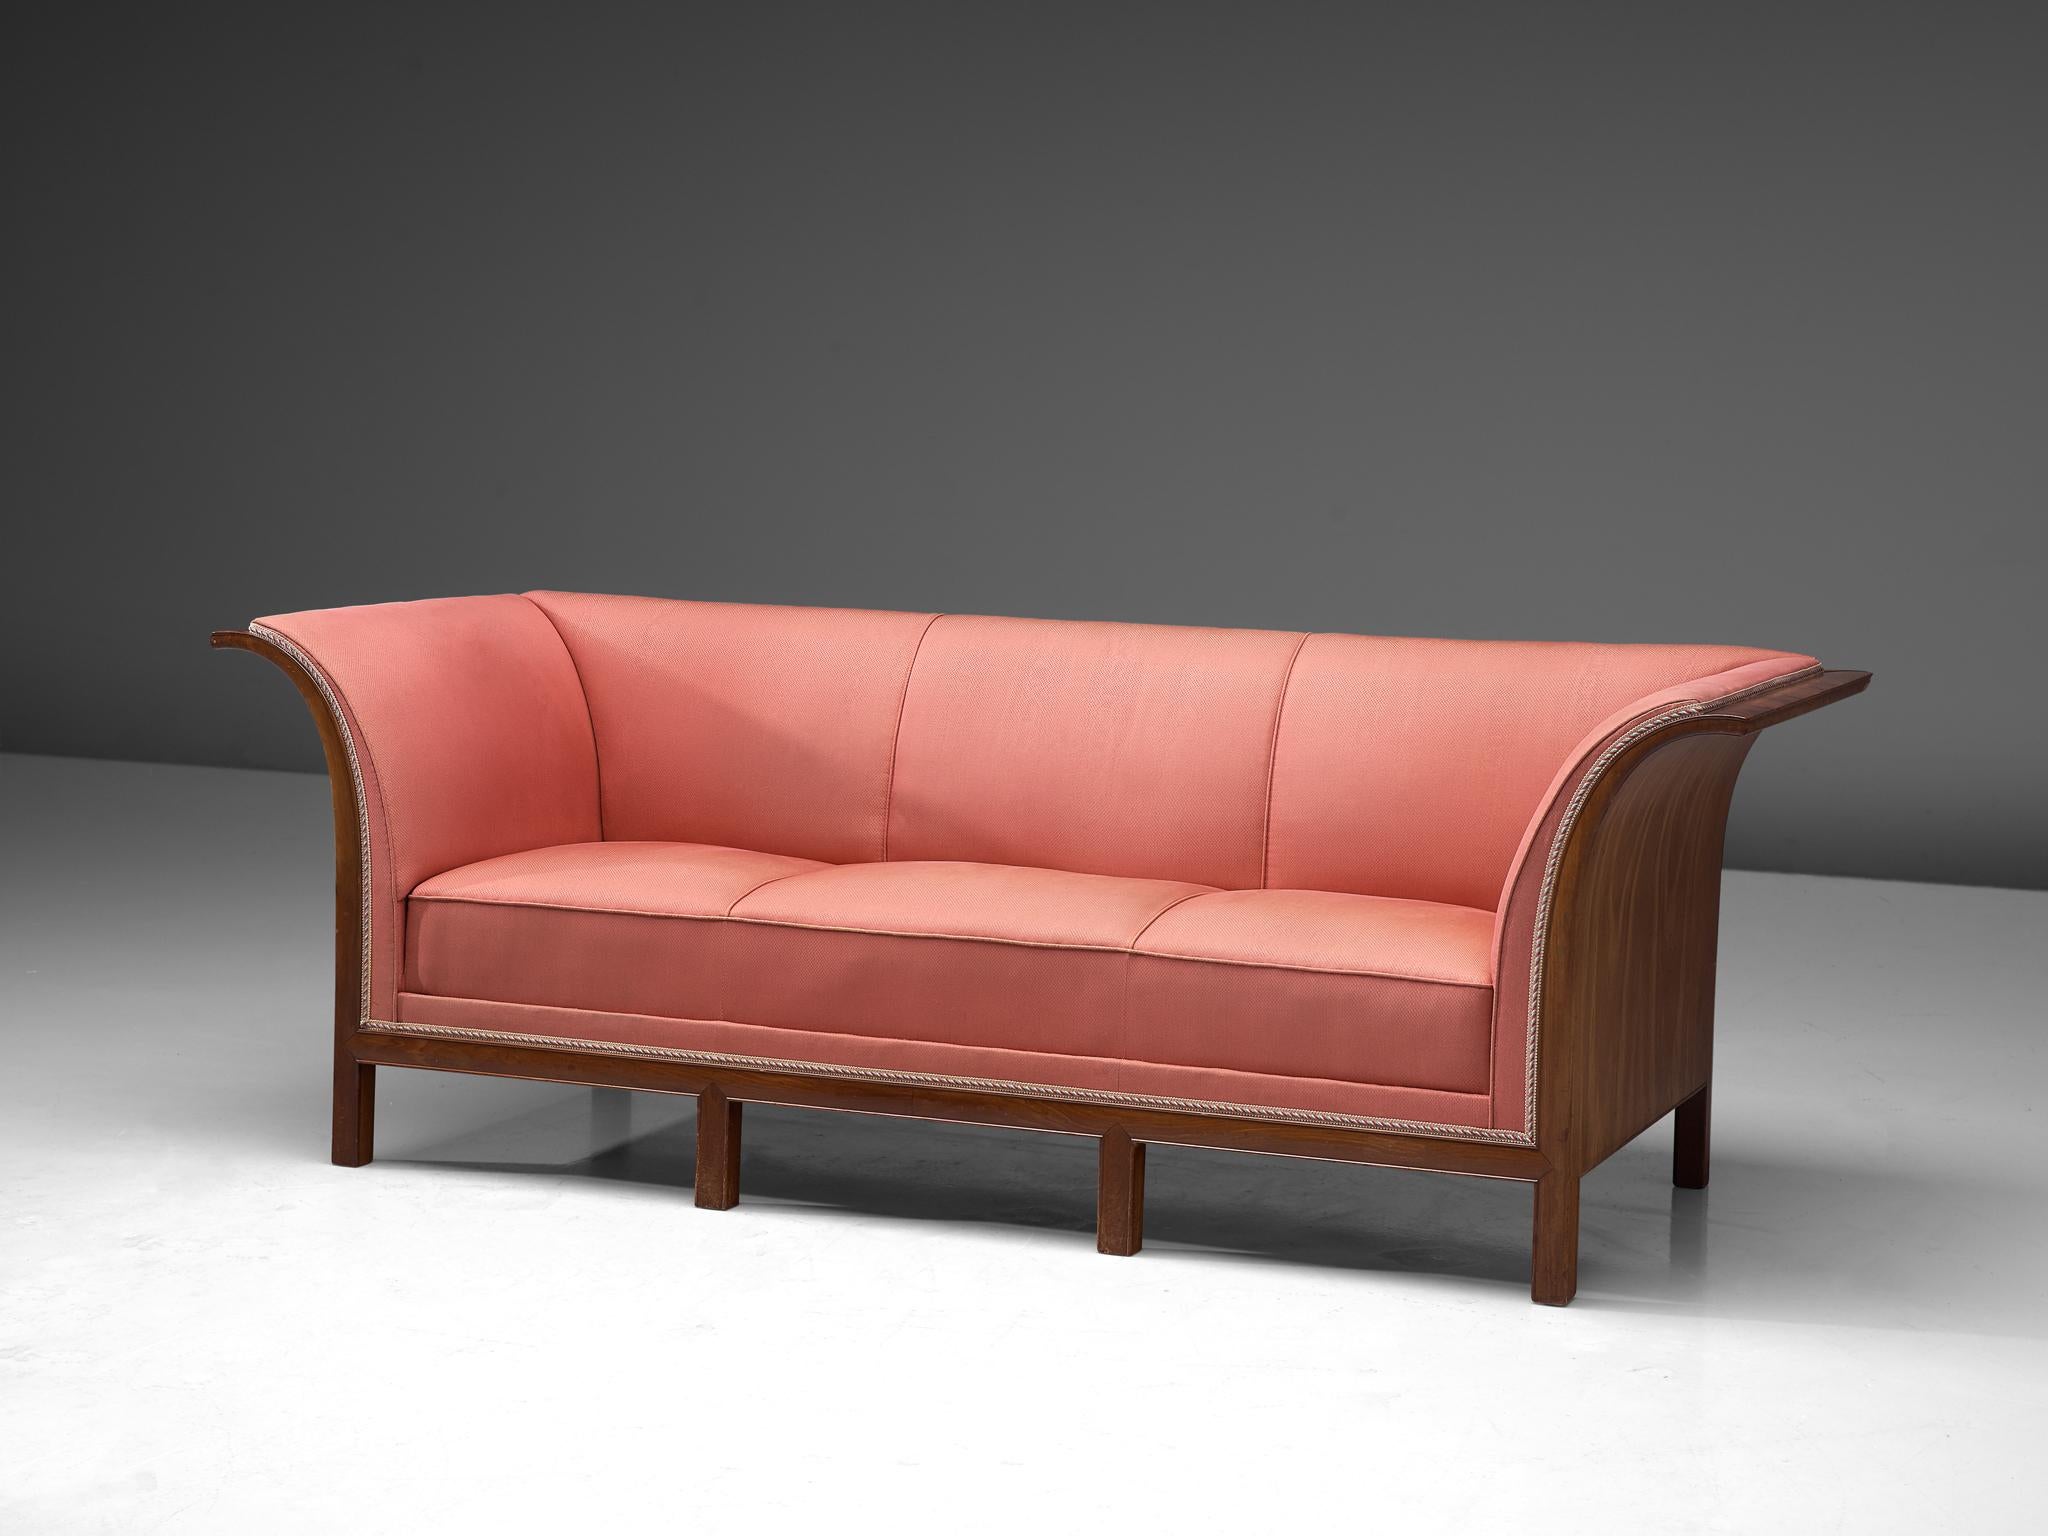 Danish Frits Henningsen Sofa in Mahogany and Pink Upholstery 